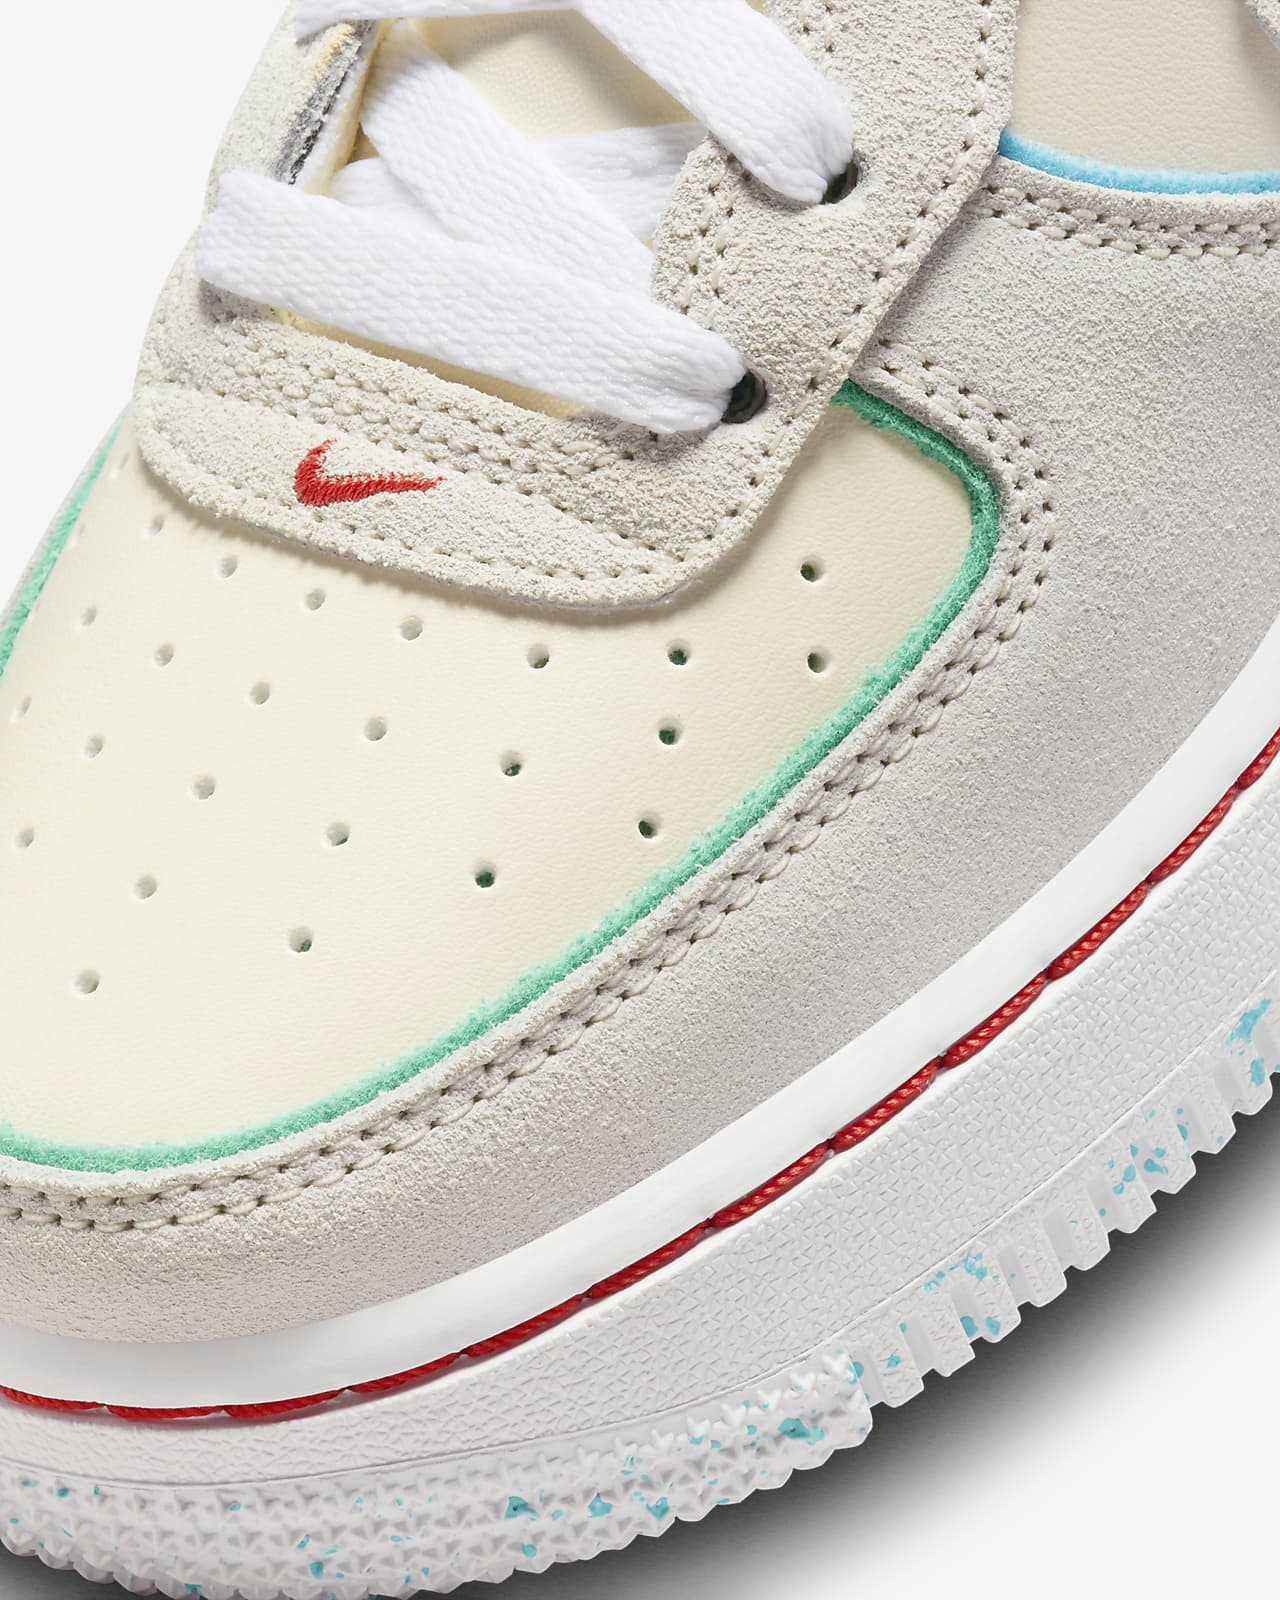 Sneakers Release – Nike Air Force 1 LV8 2 “Black/White” Grade  School, Preschool & Toddler Kids’ Shoe Launching 2/7